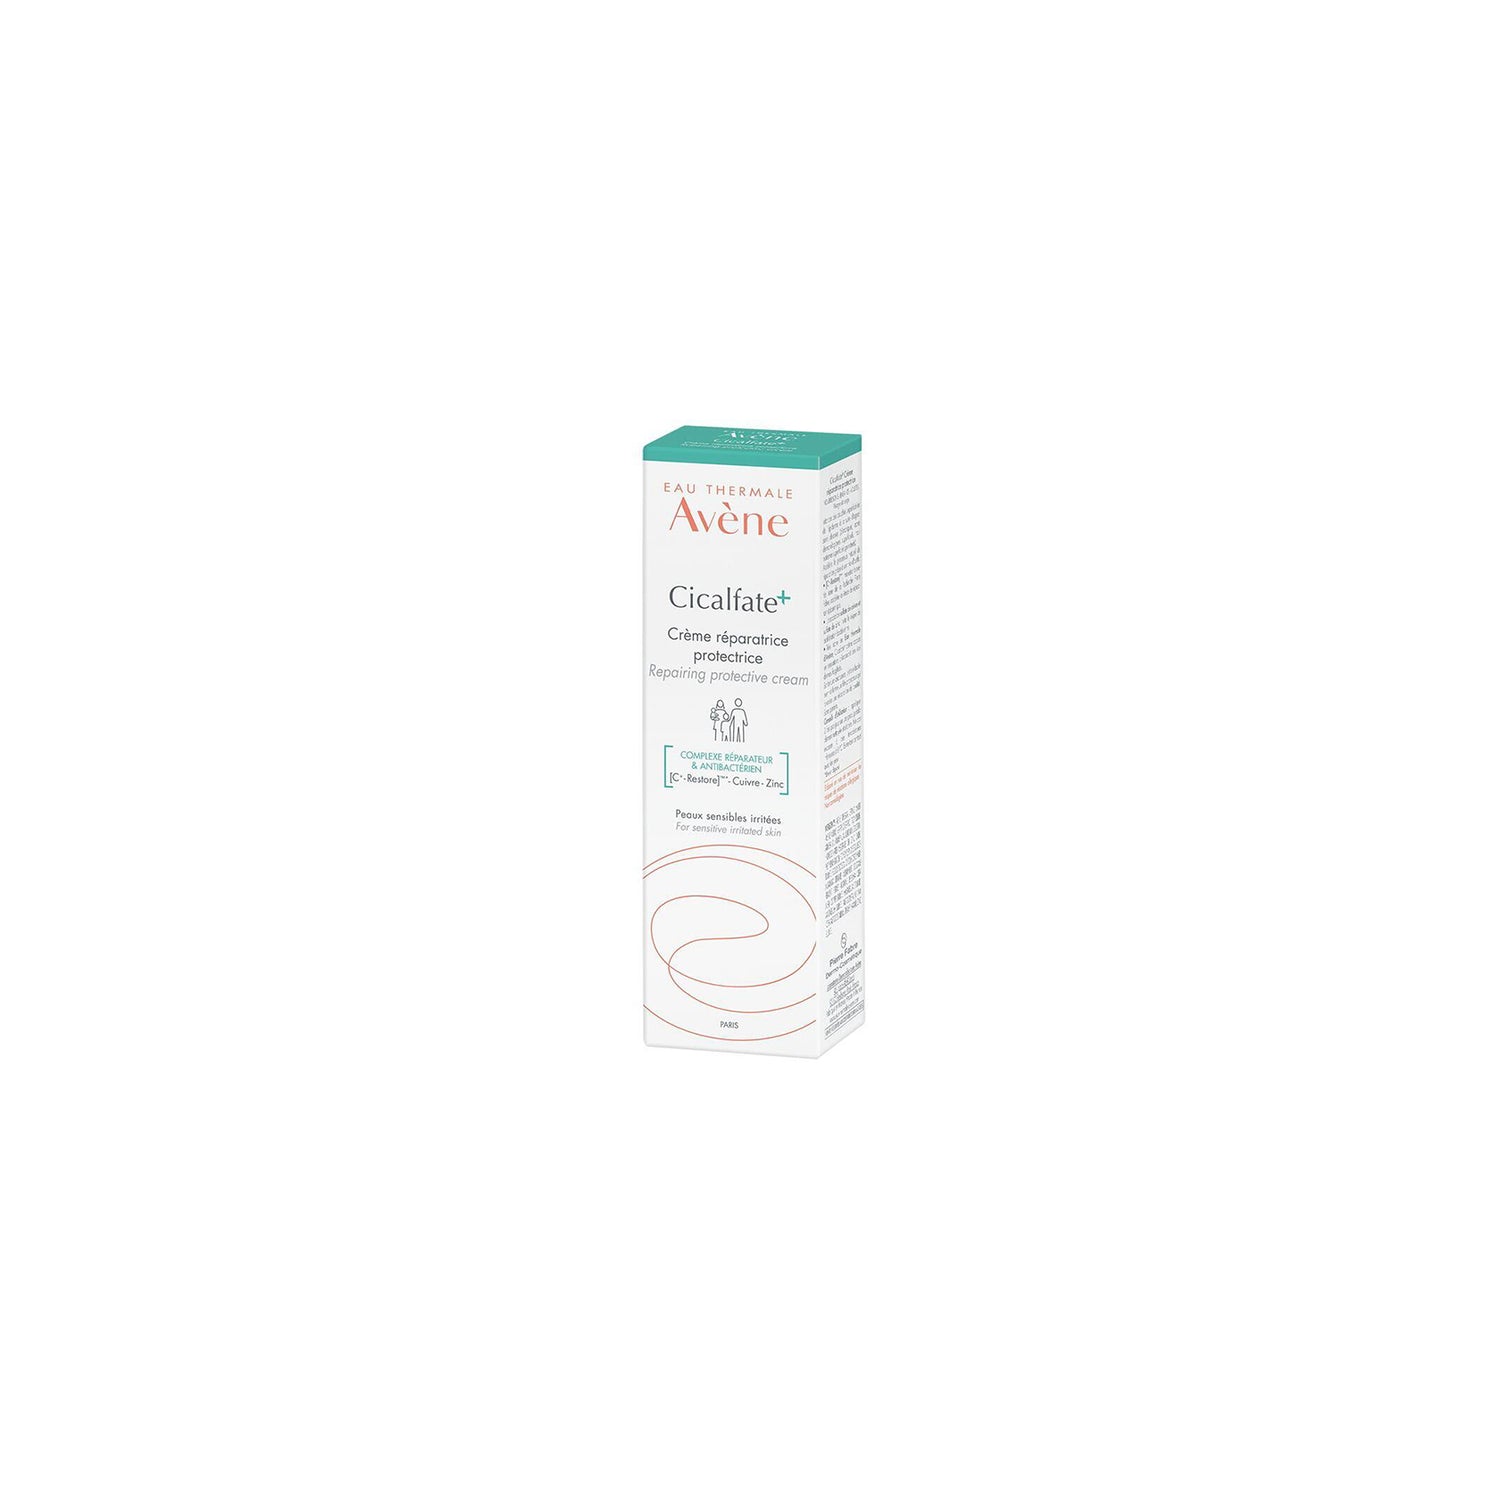 Buy Avène Cicalfate+ Repairing Protective Cream 100ml (3.38fl oz) · USA